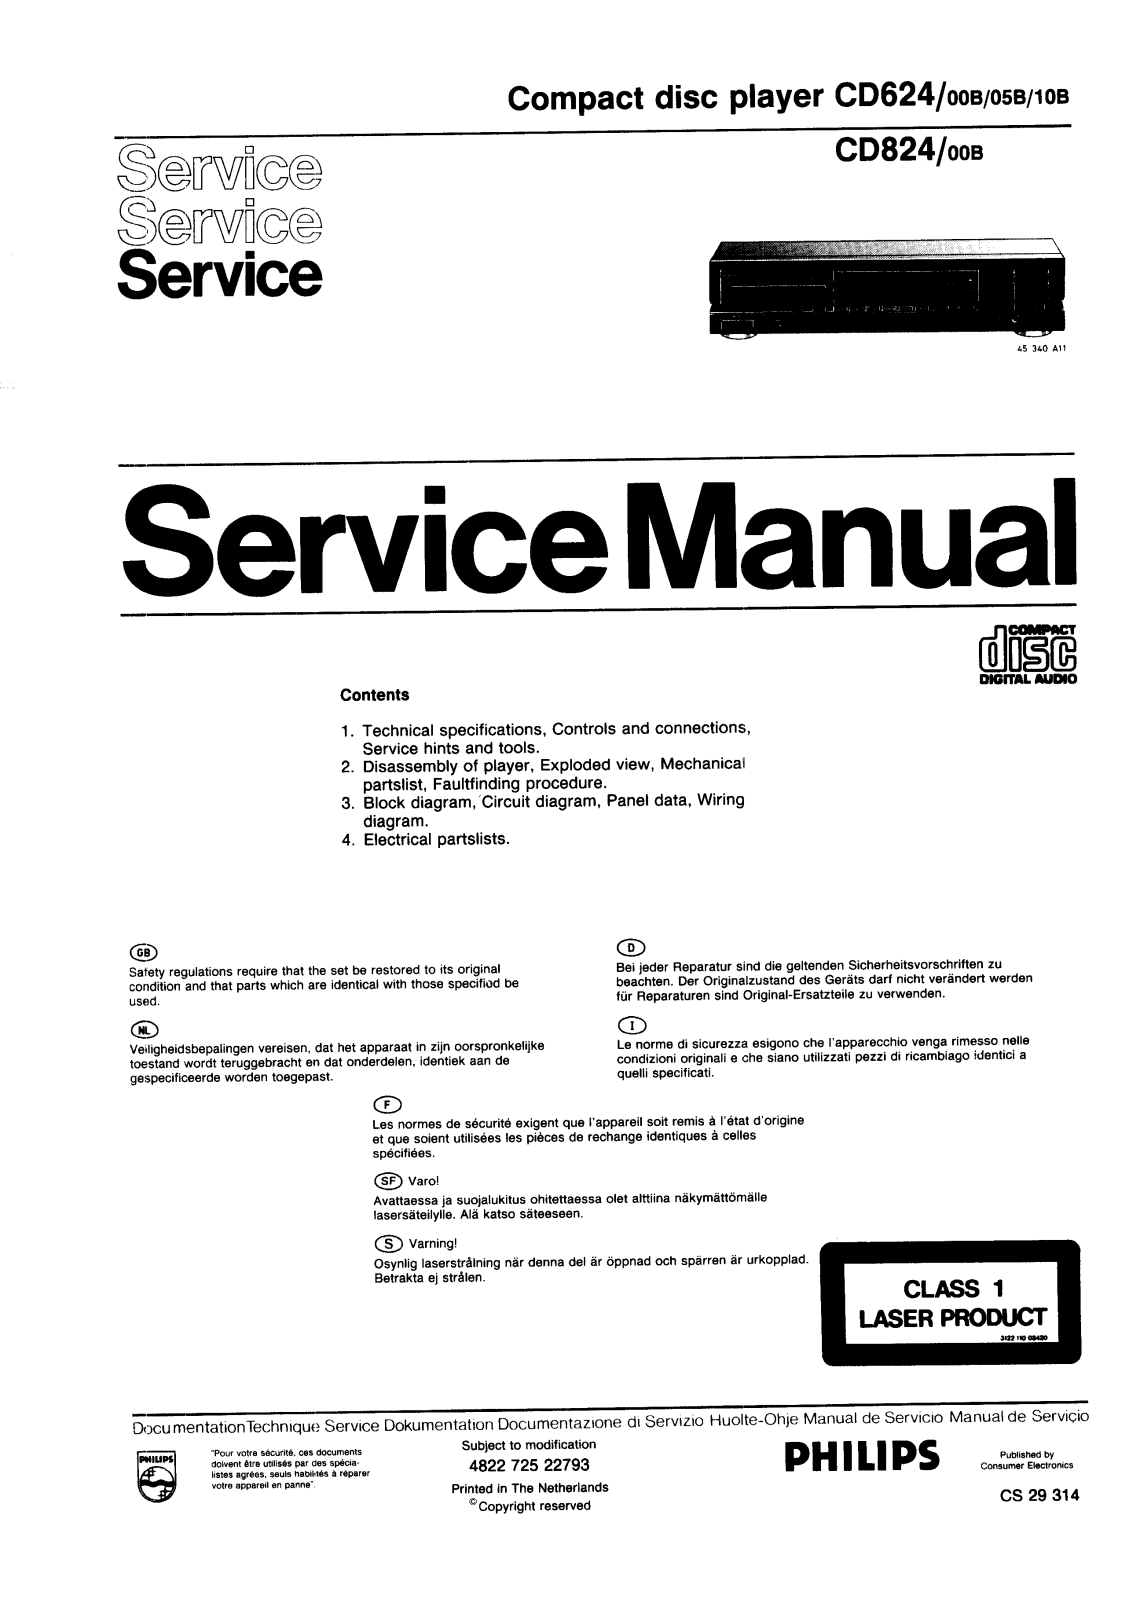 Philips CD-624 Service manual